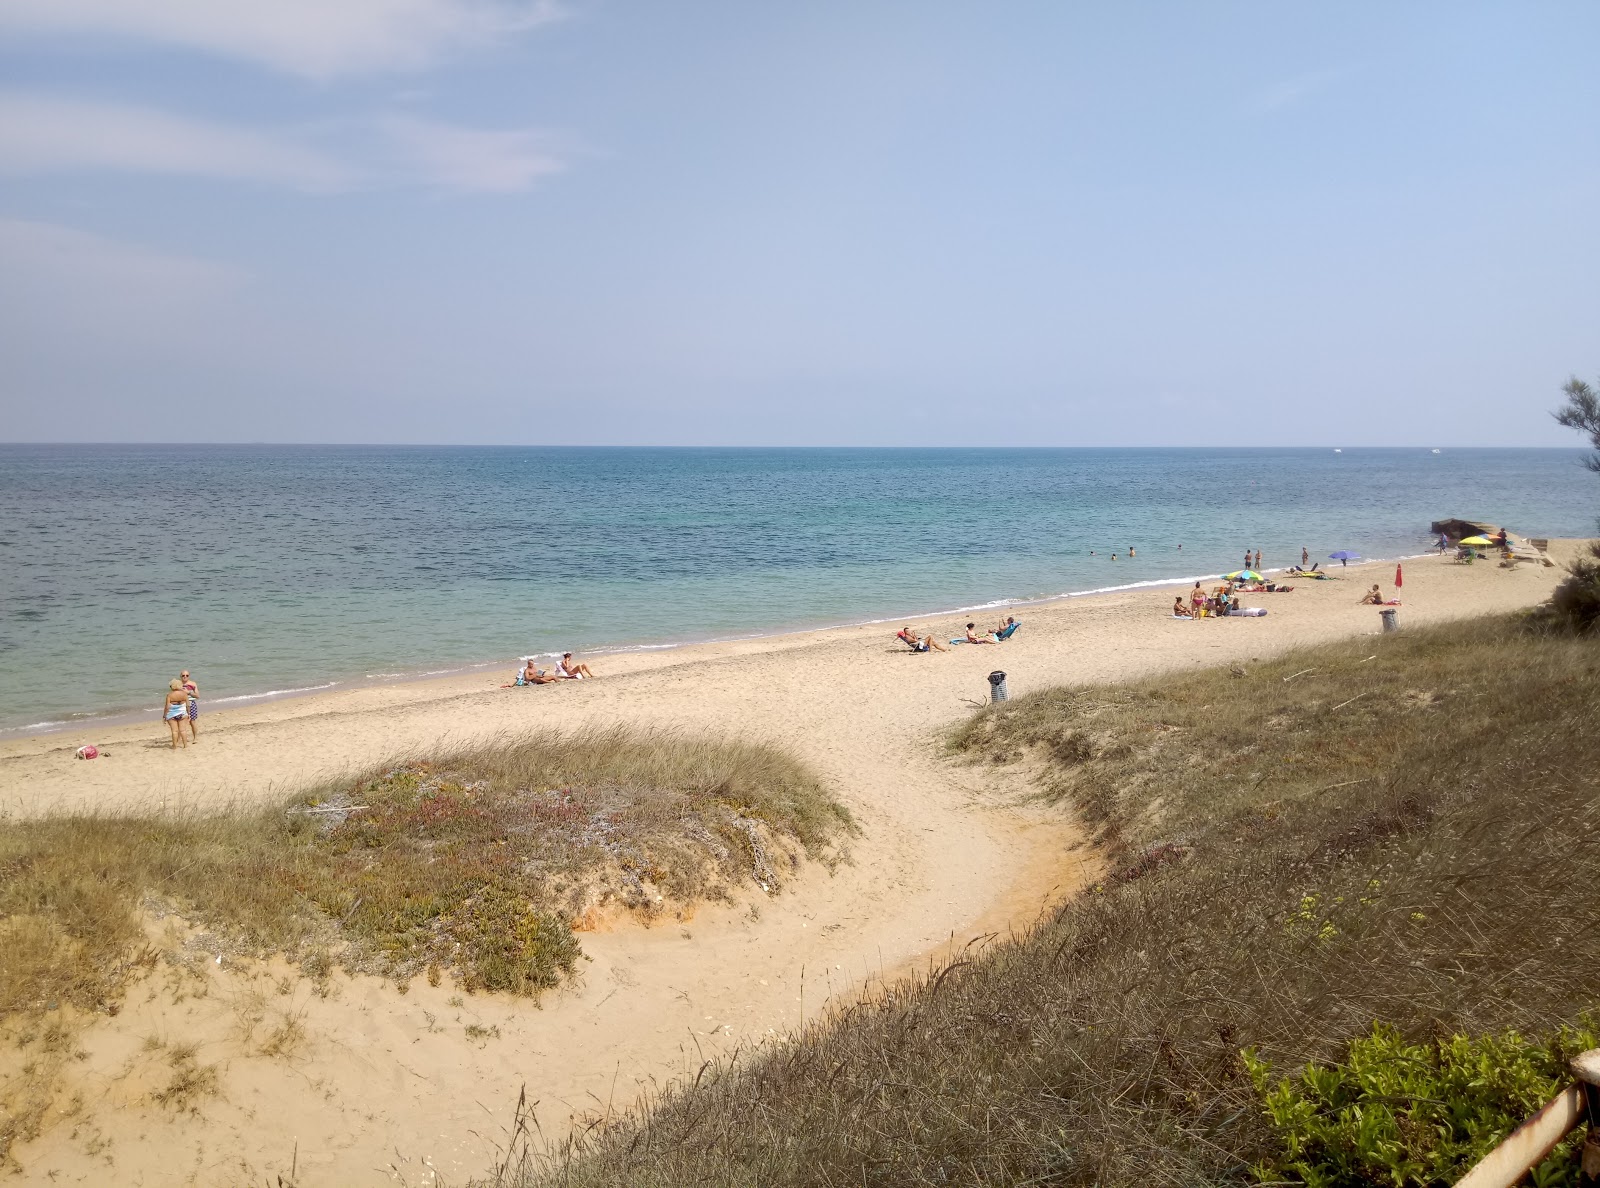 Foto von Spiaggia di Sciaia mit heller sand Oberfläche